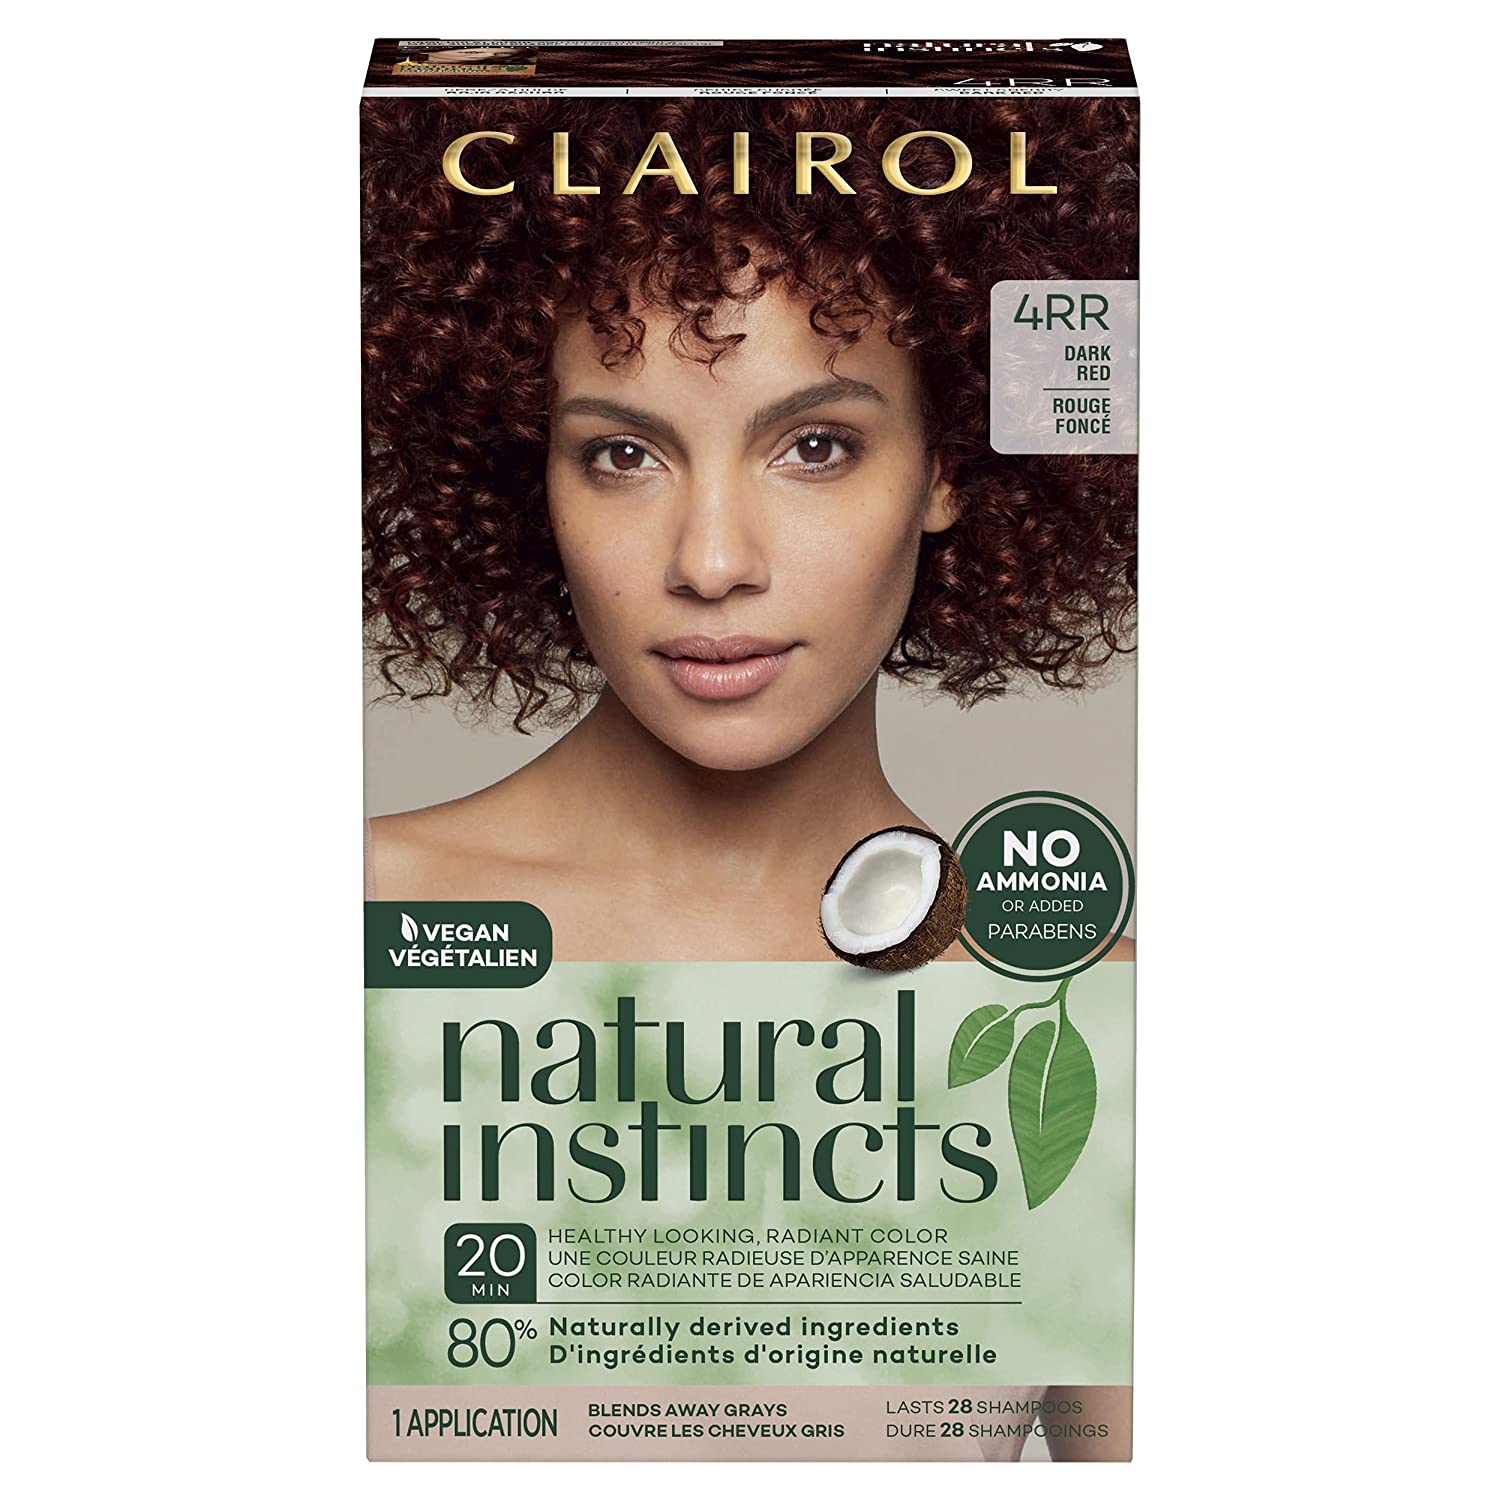 Clairol Natural Instincts Semi-Permanent Hair Dye, 4RR Dark Red Hair